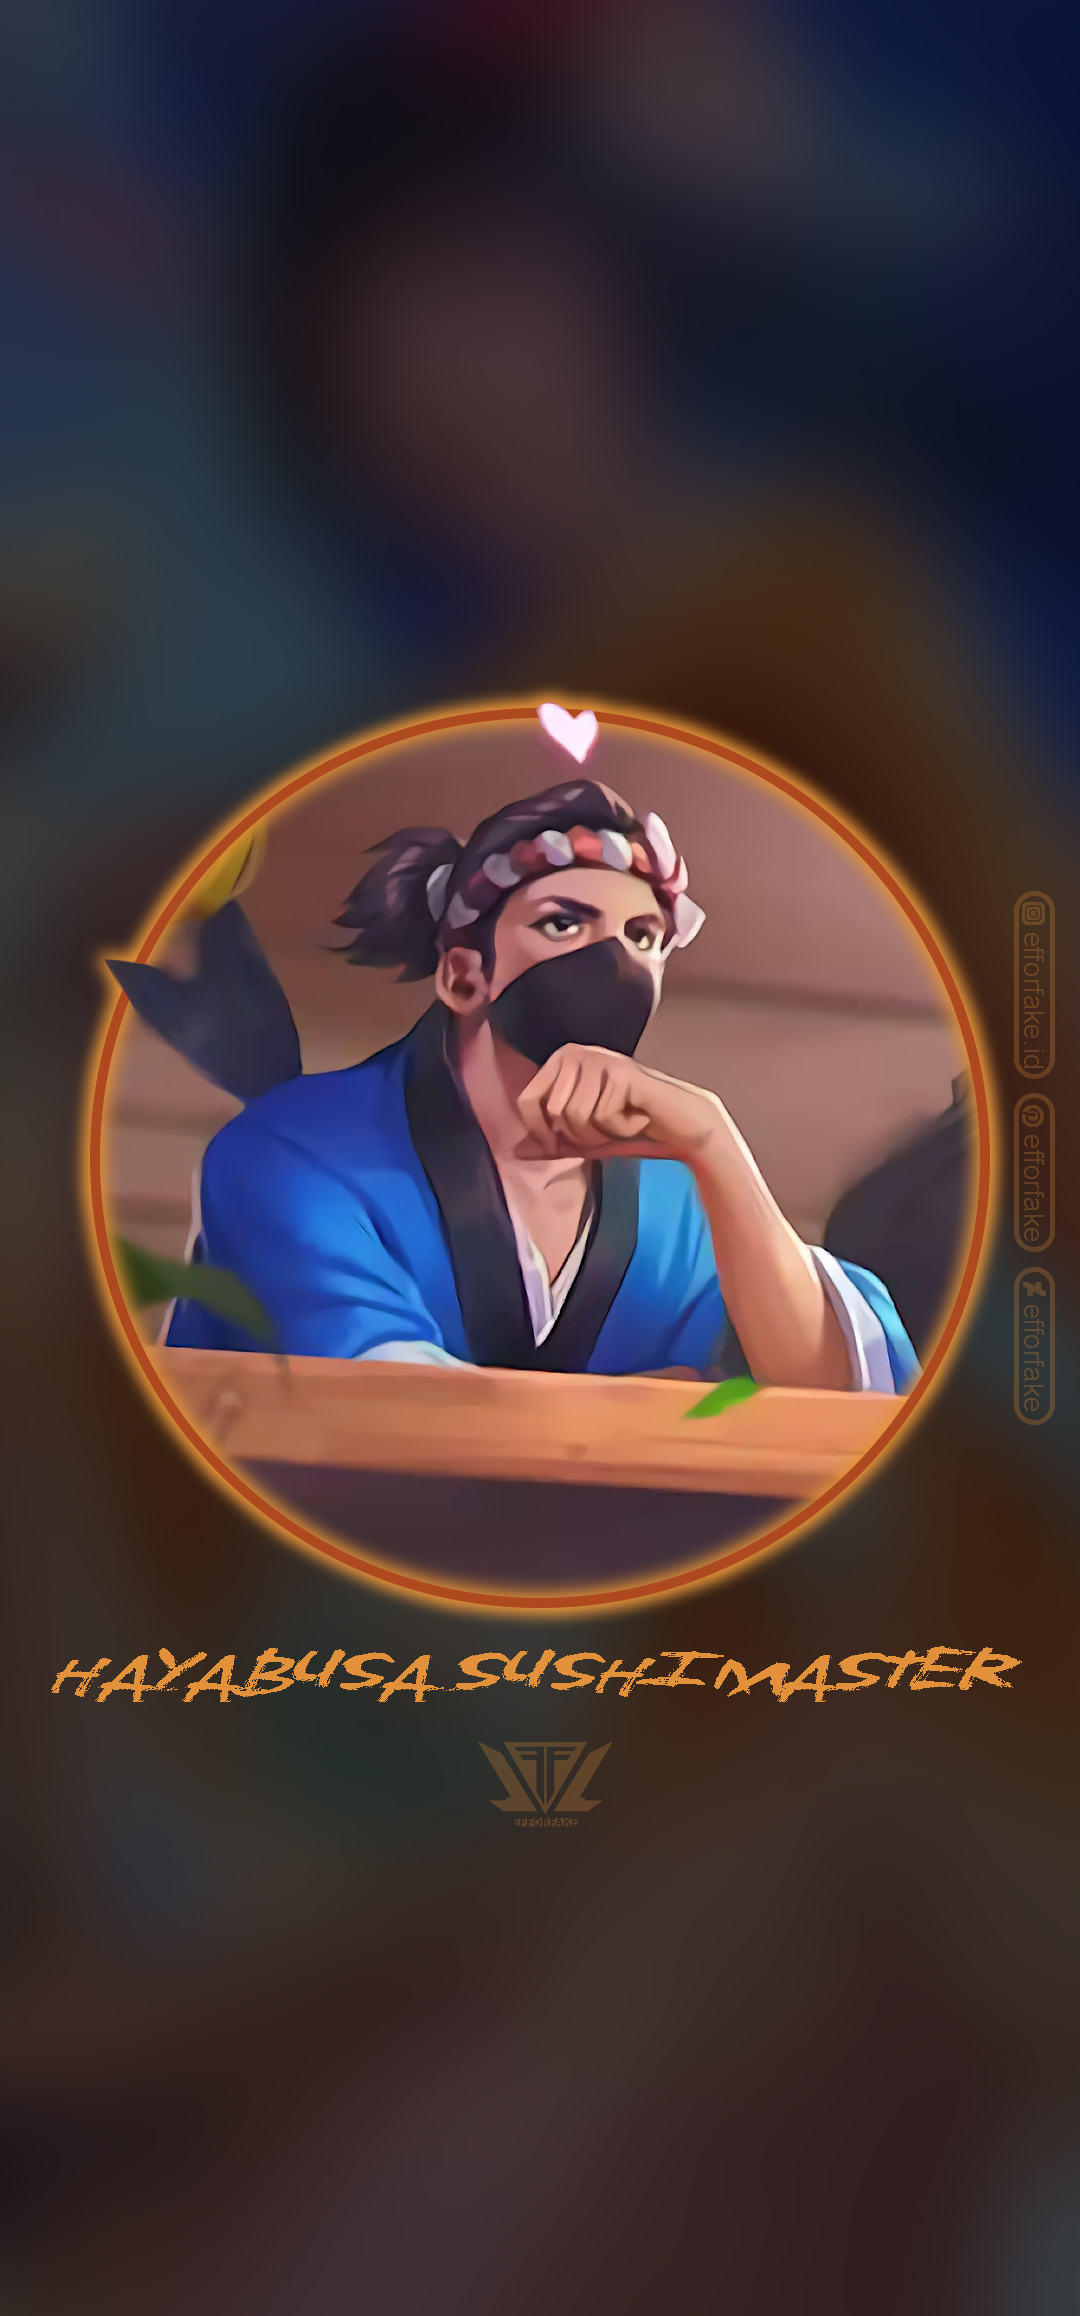 Hayabusa Sushi Master - Mobile Legends Wallpaper by efforfake on DeviantArt